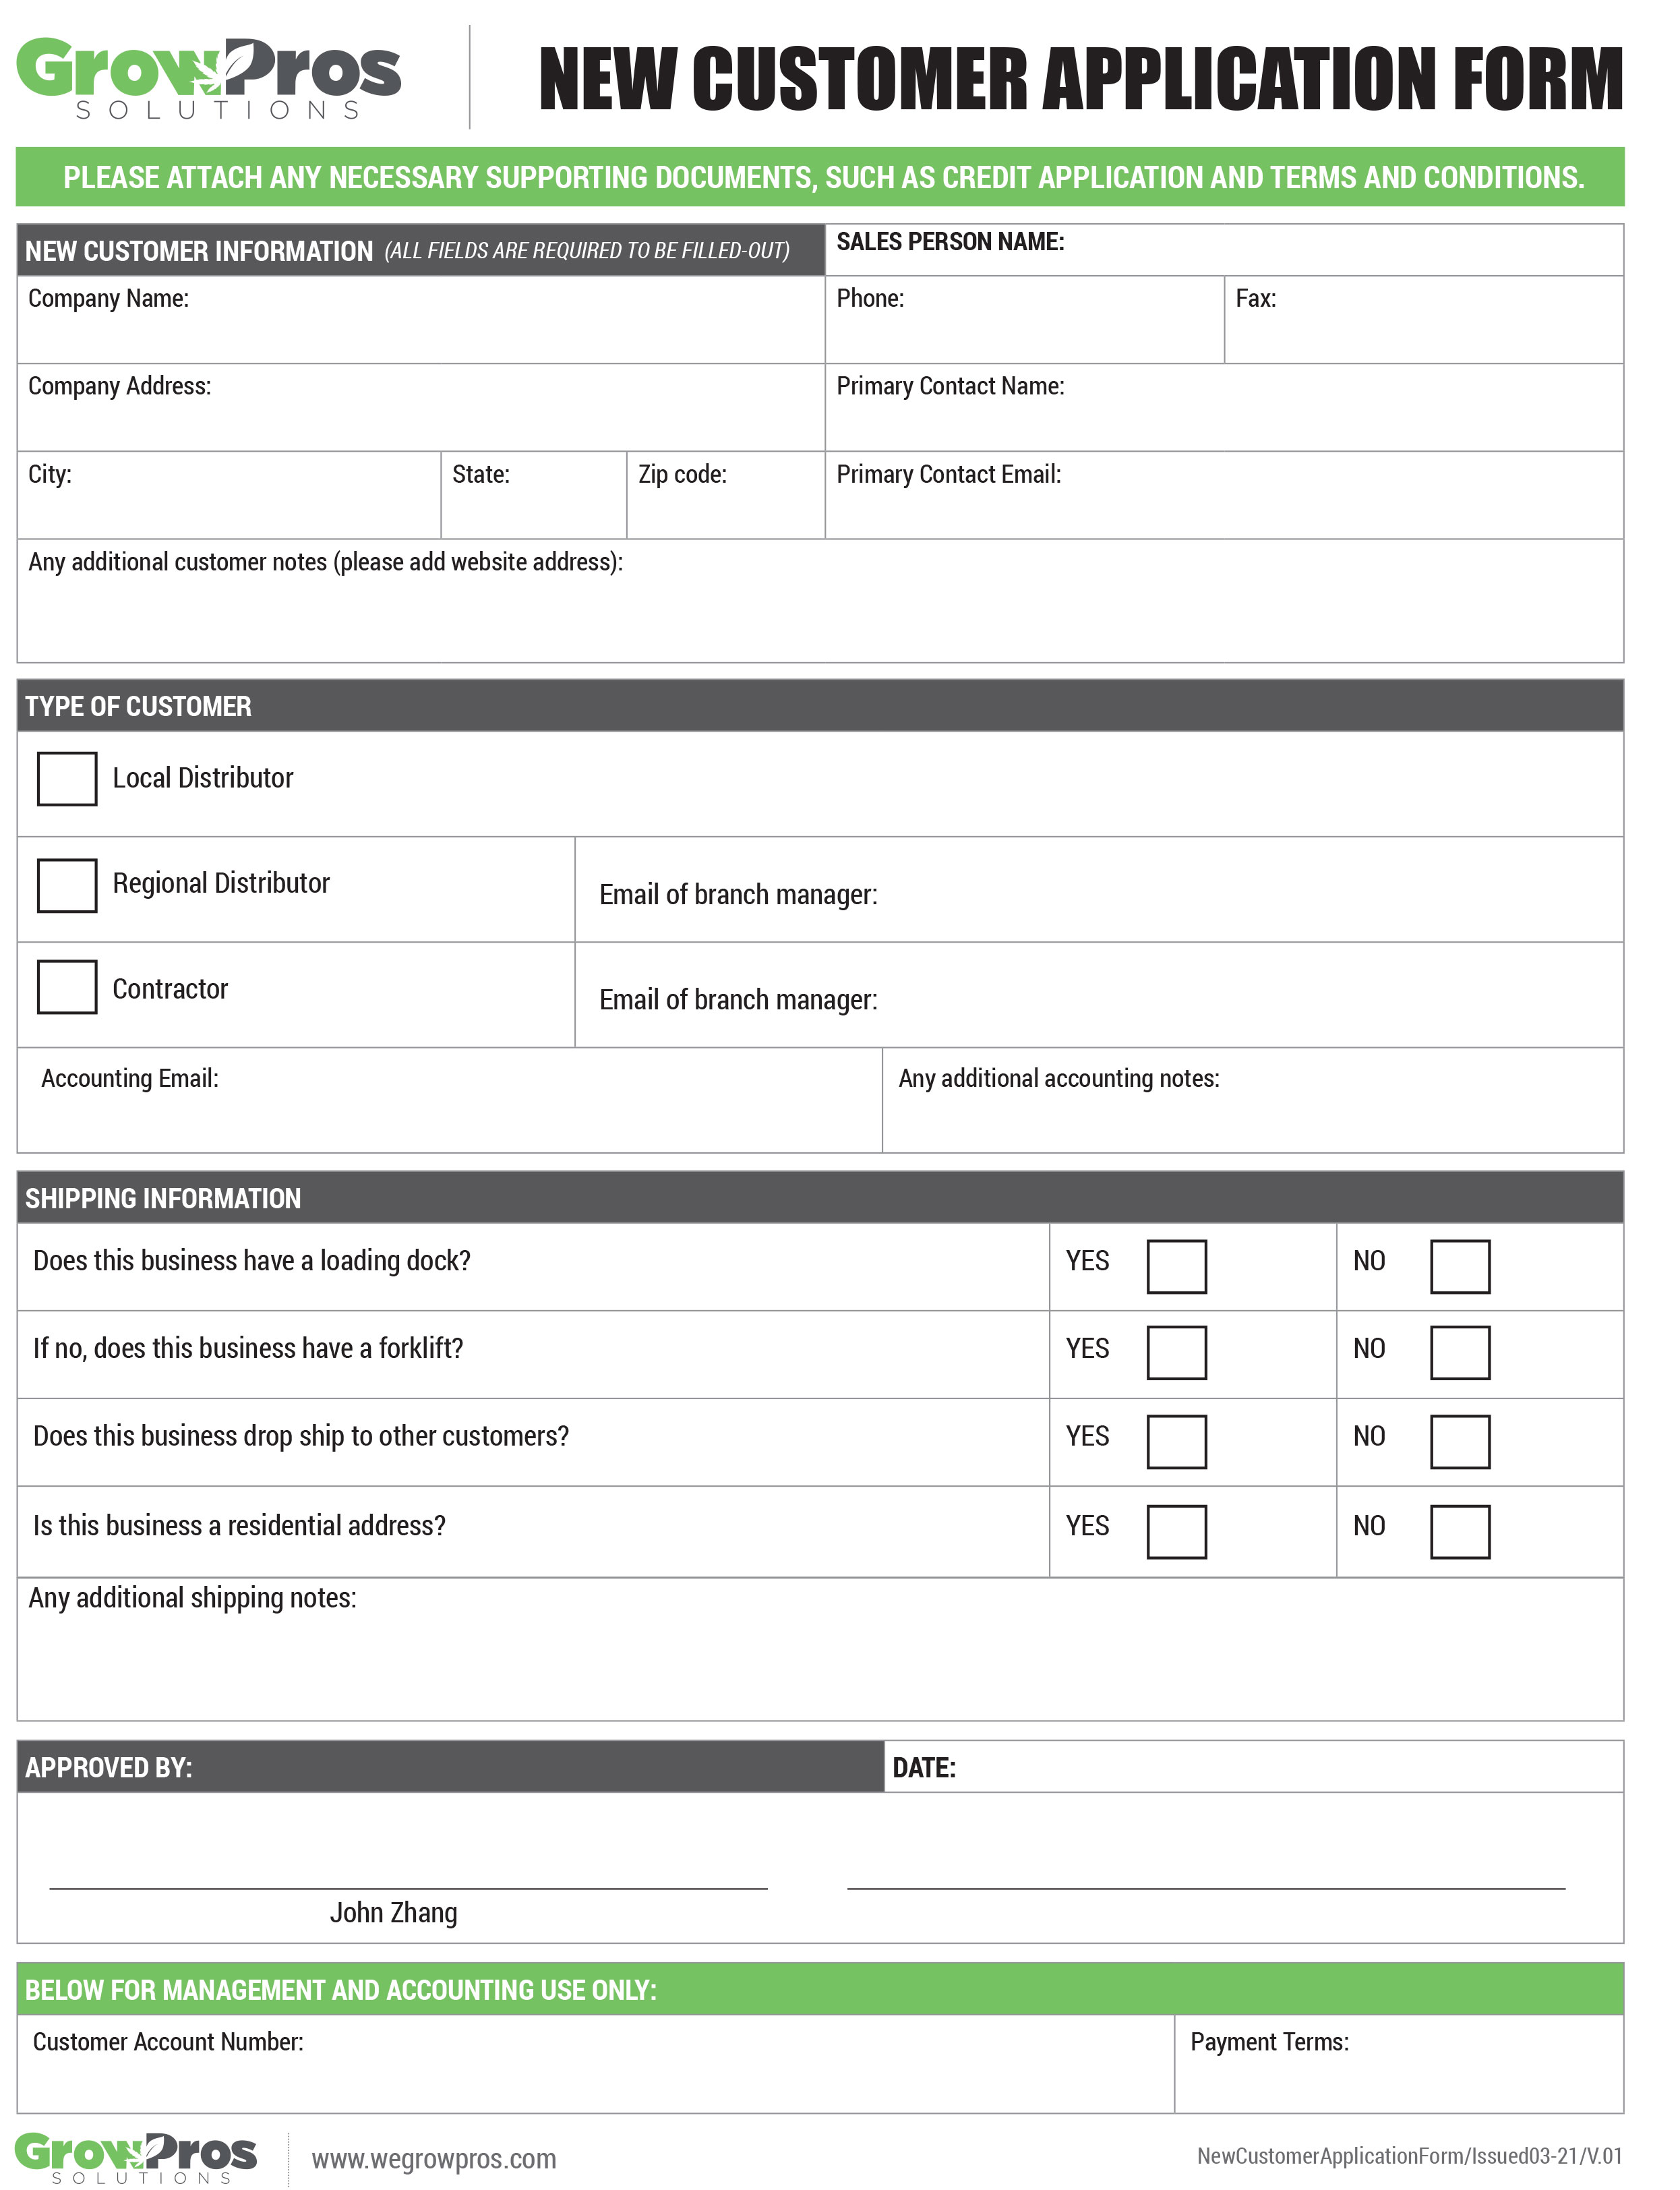 gps new customer form